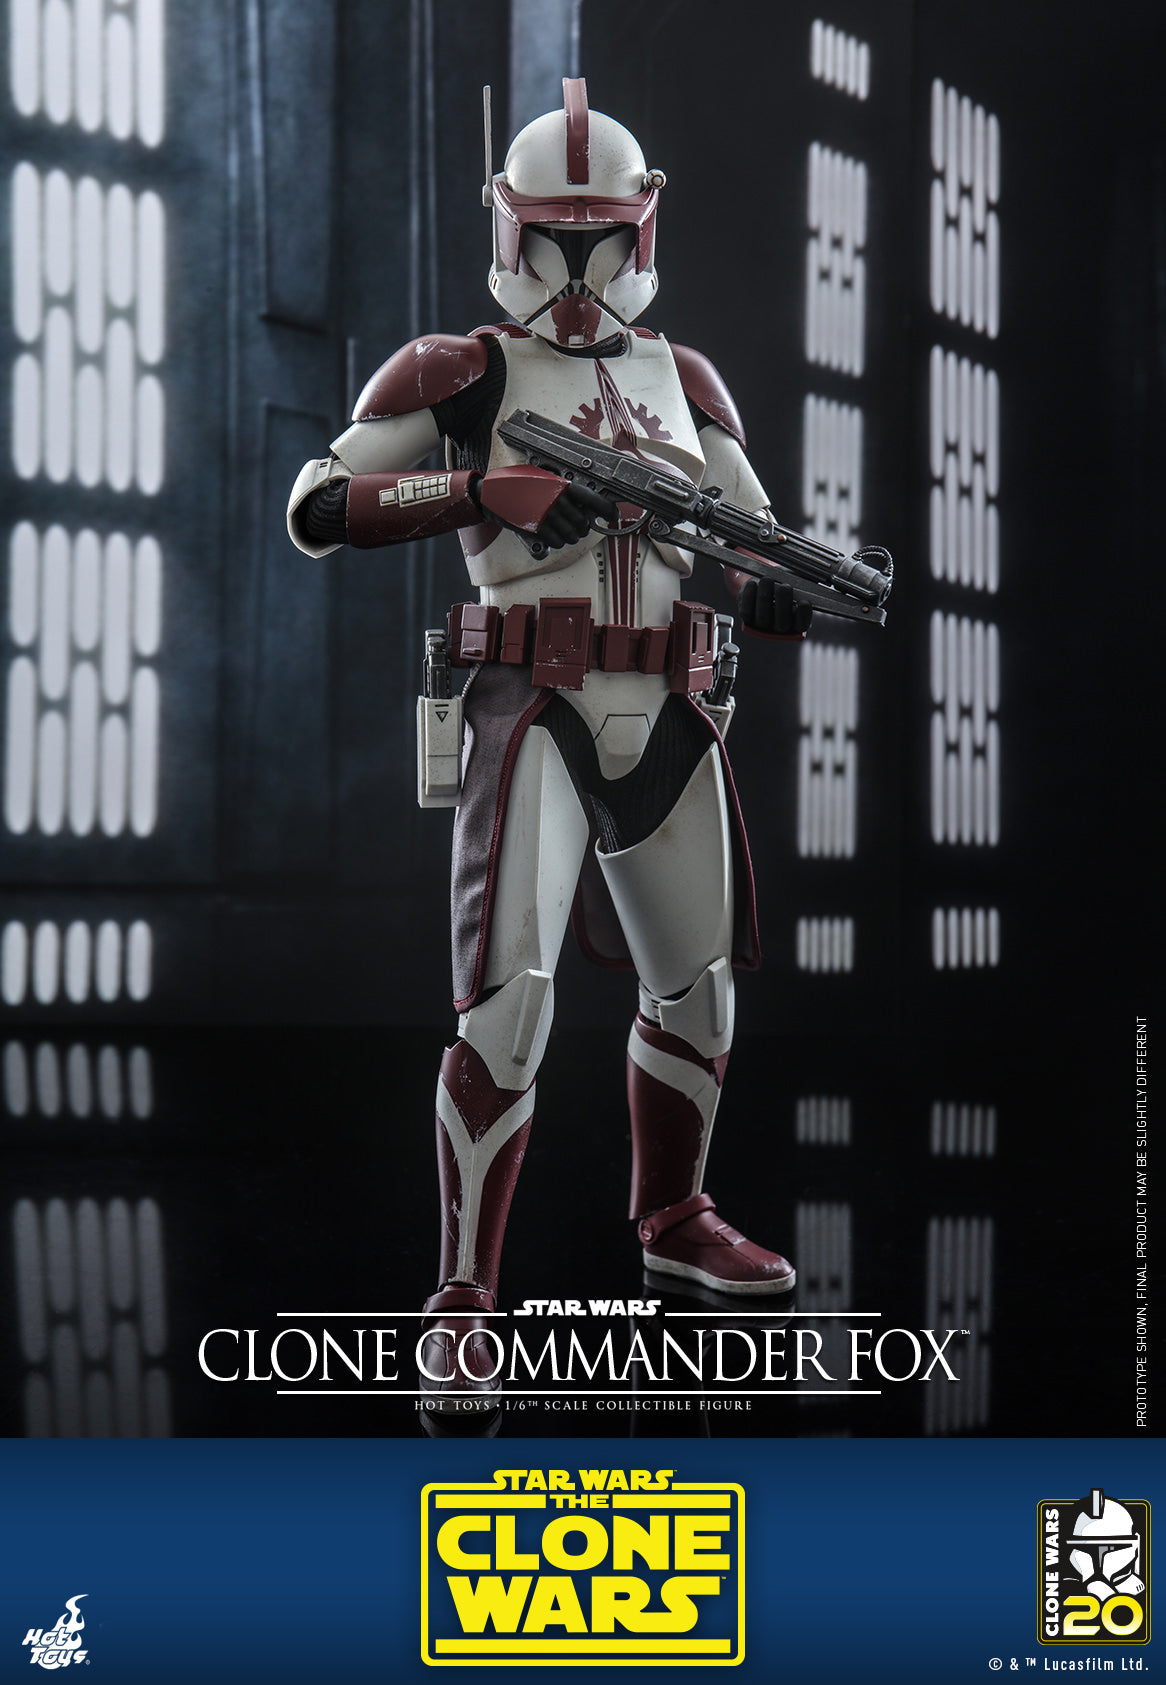 Clone Commander Fox: The Clone Wars: Star Wars-Hot Toys